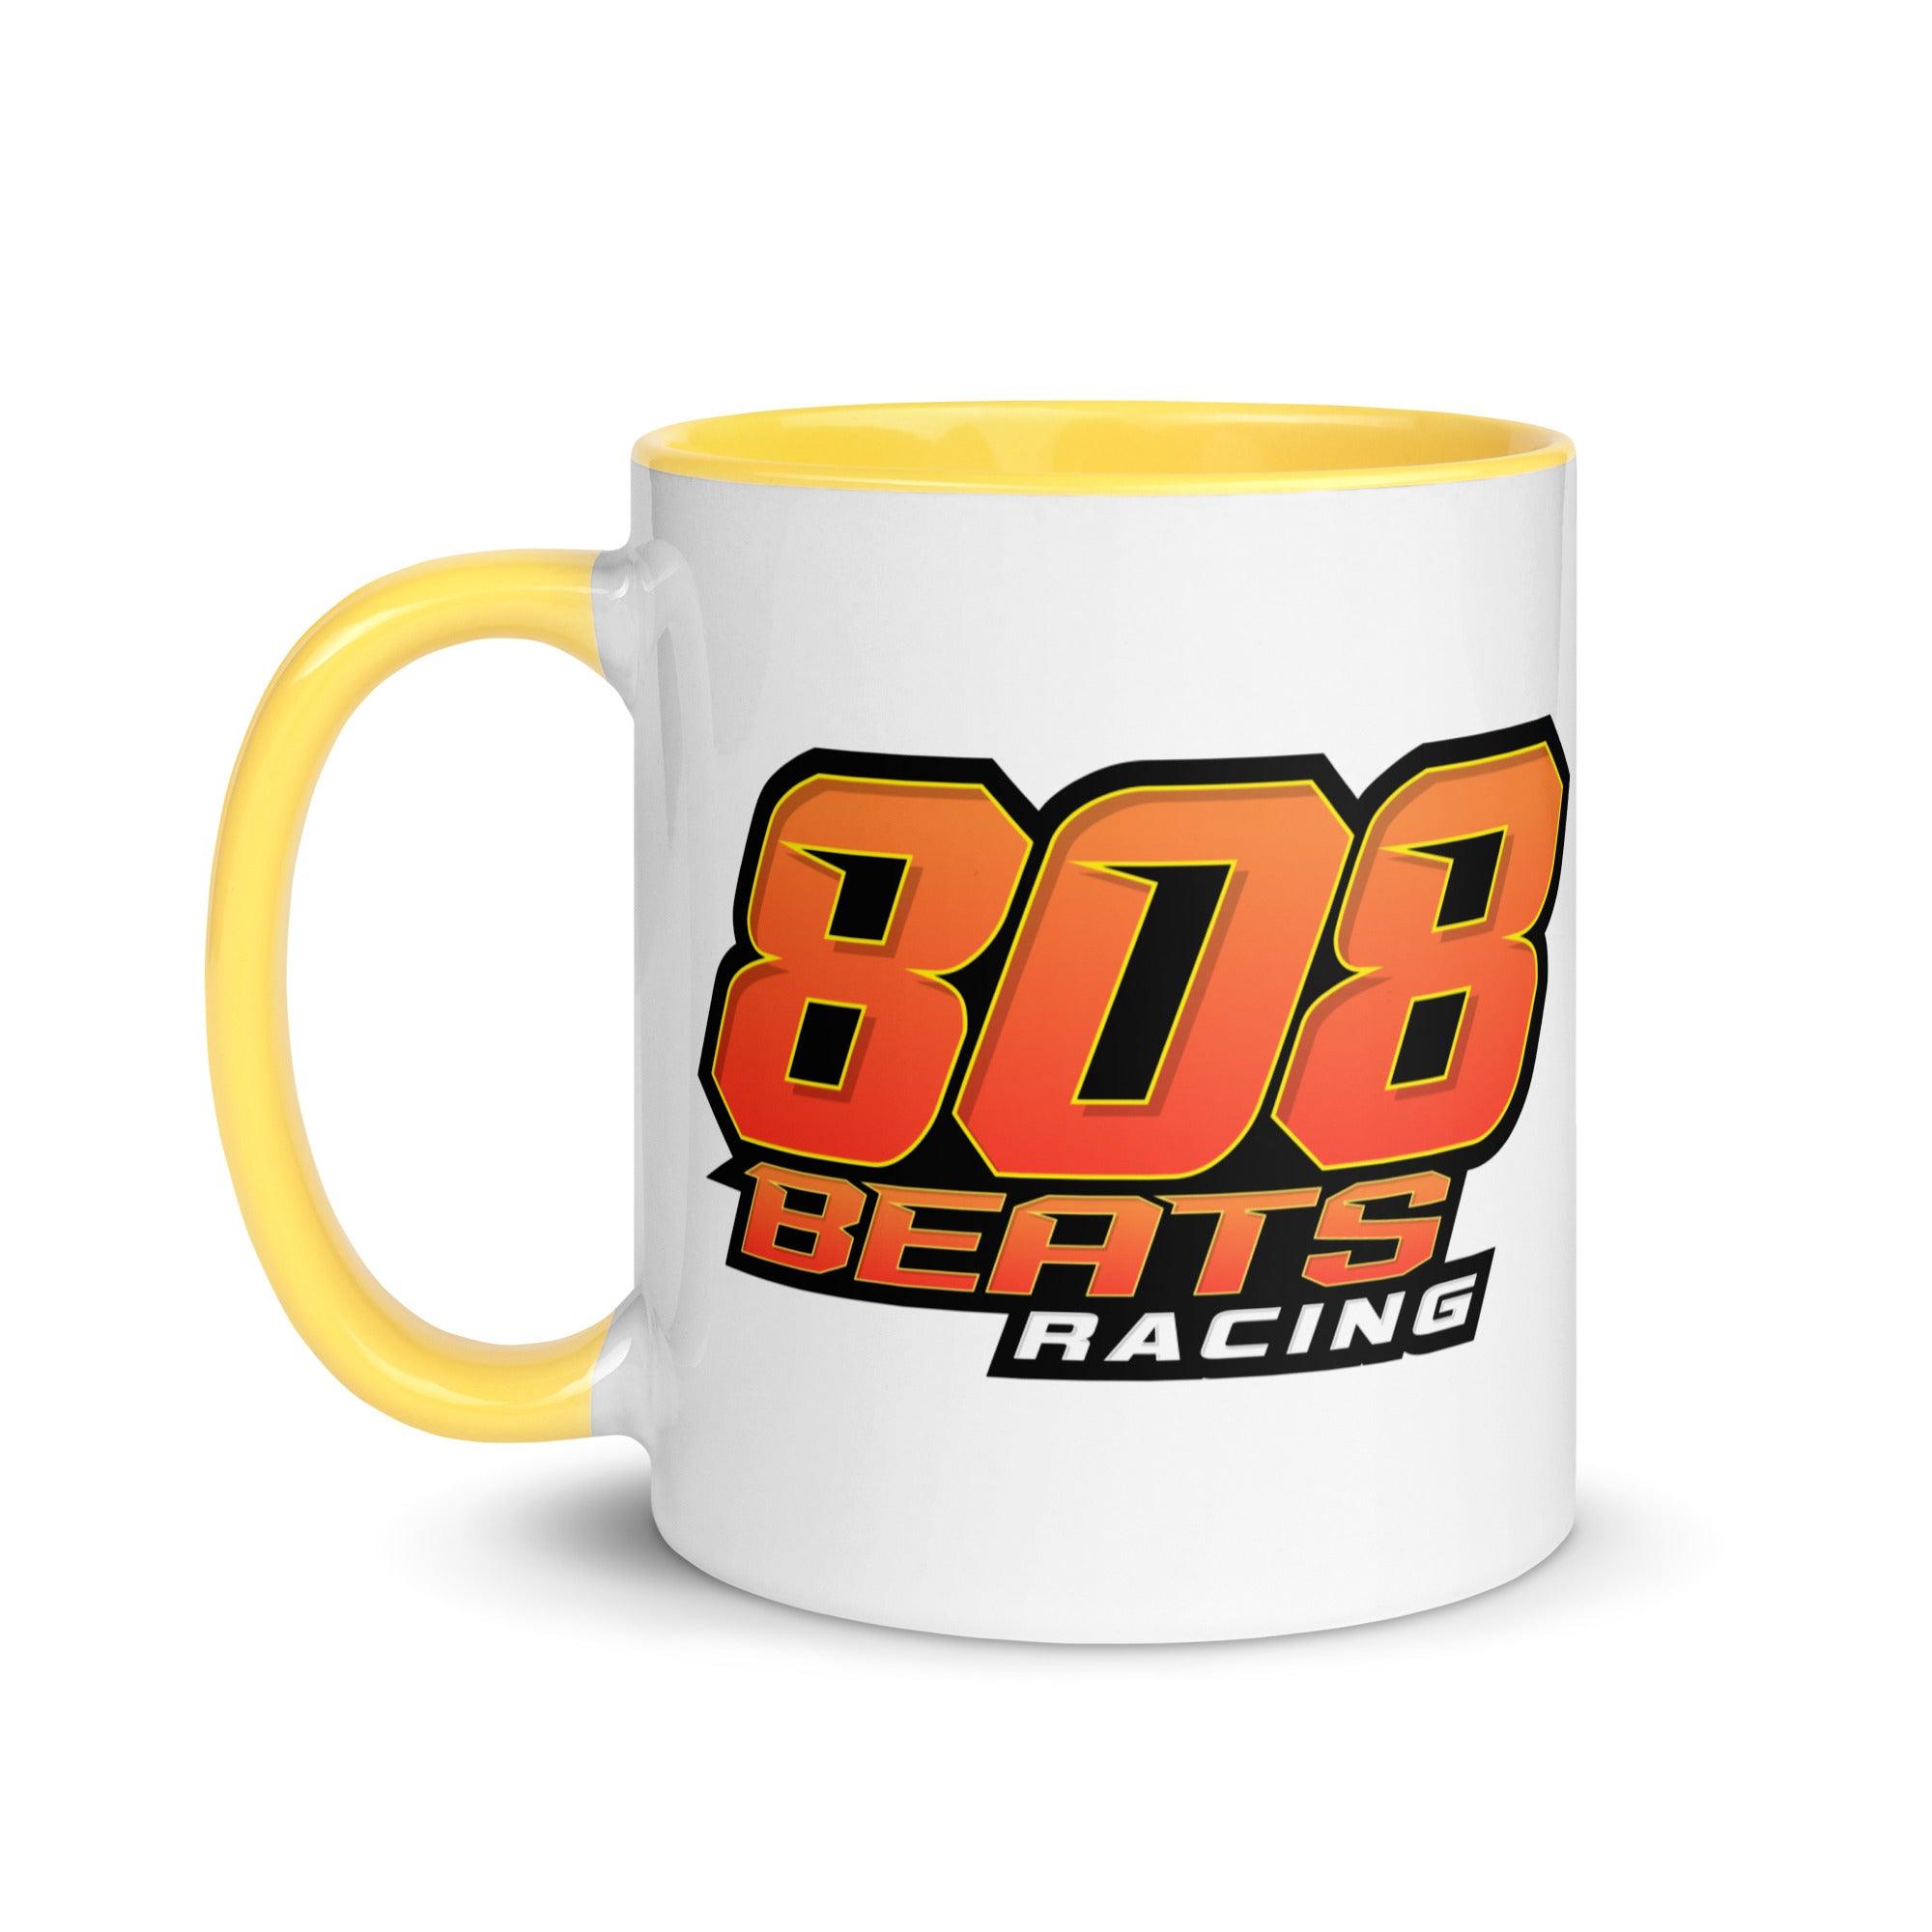 Roland® TR-808 Inspired Design | Vintage Drum Machine | 808 Beats Racing Logo Mug w/Color Inside (11oz.-15oz.) - Tedeschi Studio, LLC.